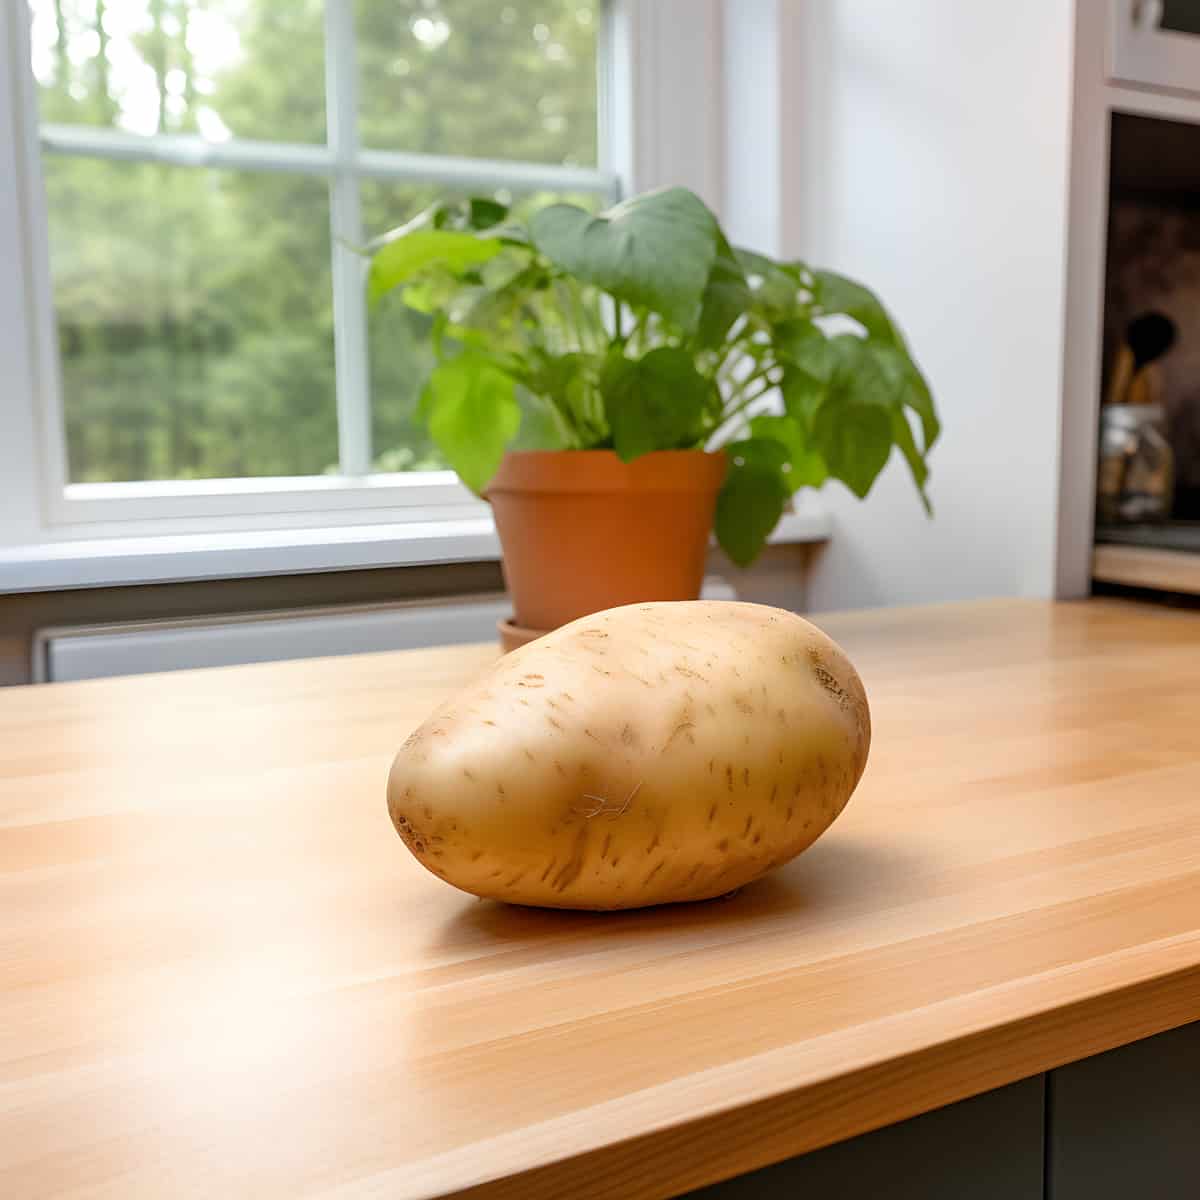 Navan Potatoes on a kitchen counter